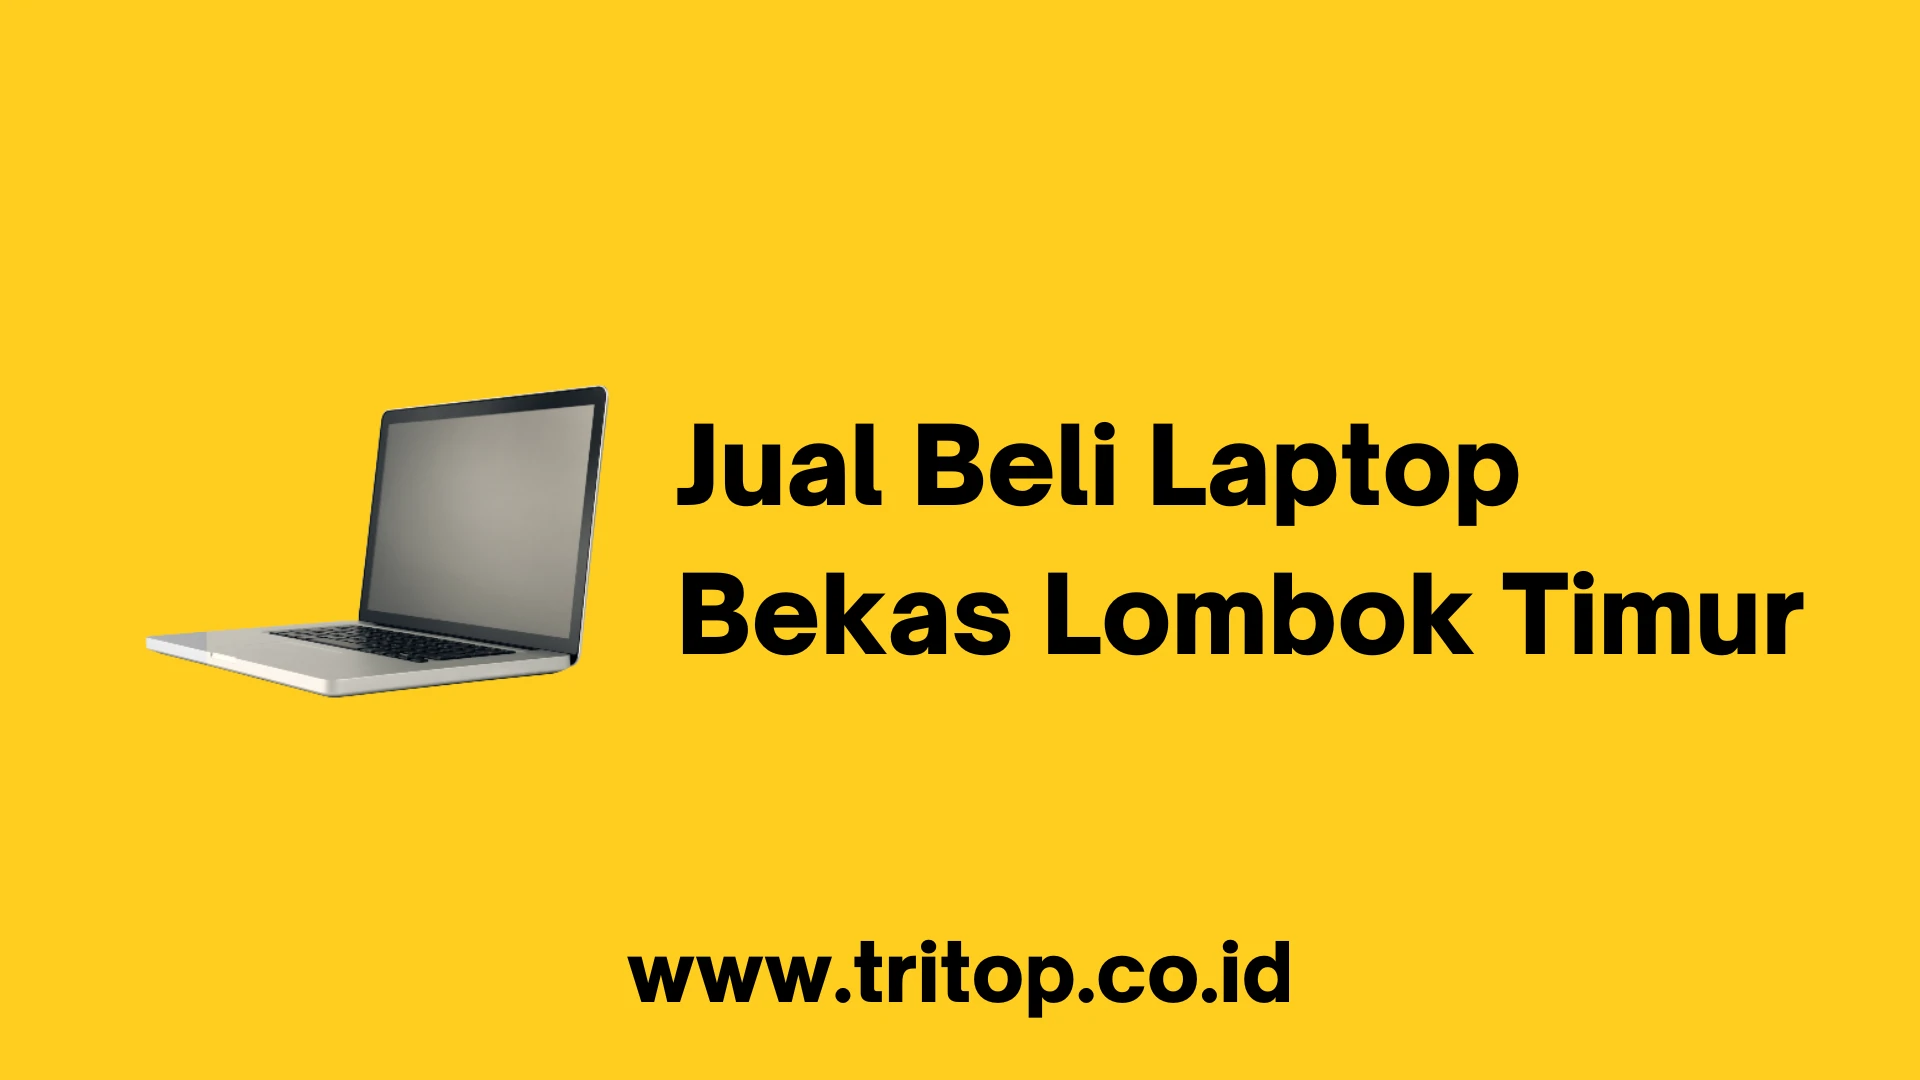 Jual Beli Laptop Bekas Lombok Timur